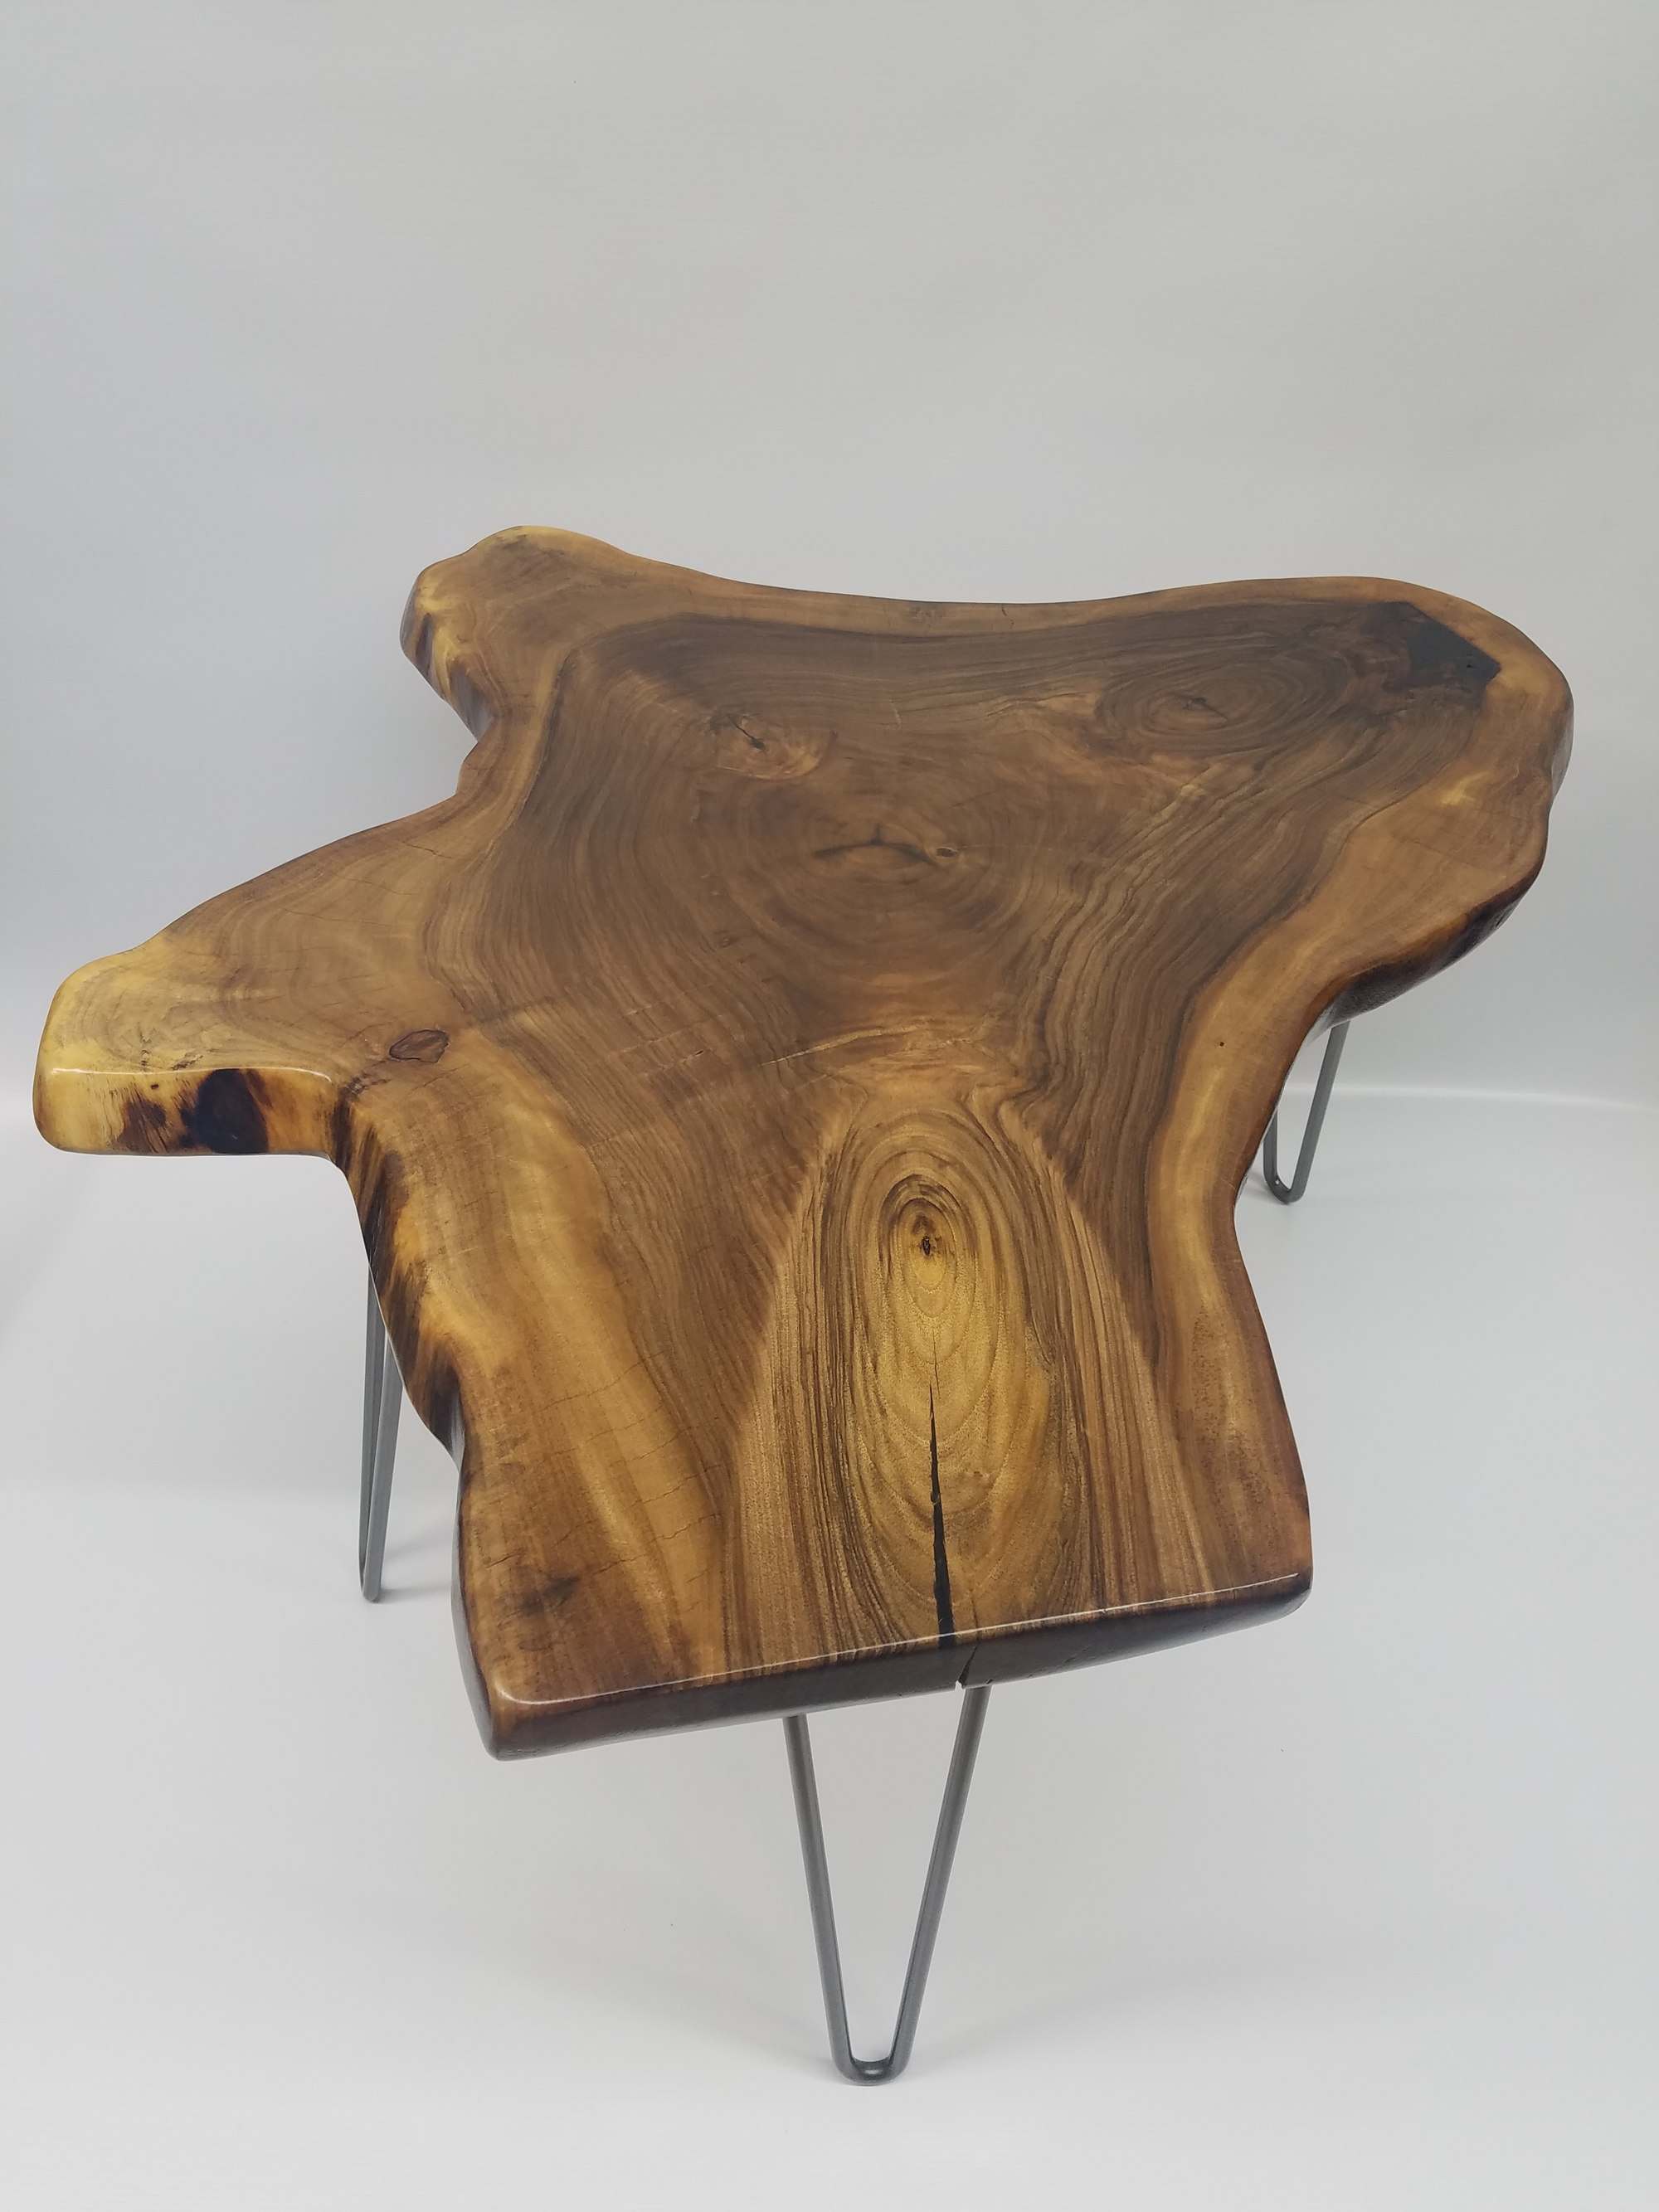 Live Edge Coffee Table- English Walnut- Tree Slice- Organic Shape- Natural Wood- Round Table- Mid Century- Modern- Rustic- Dark Wood- Cool